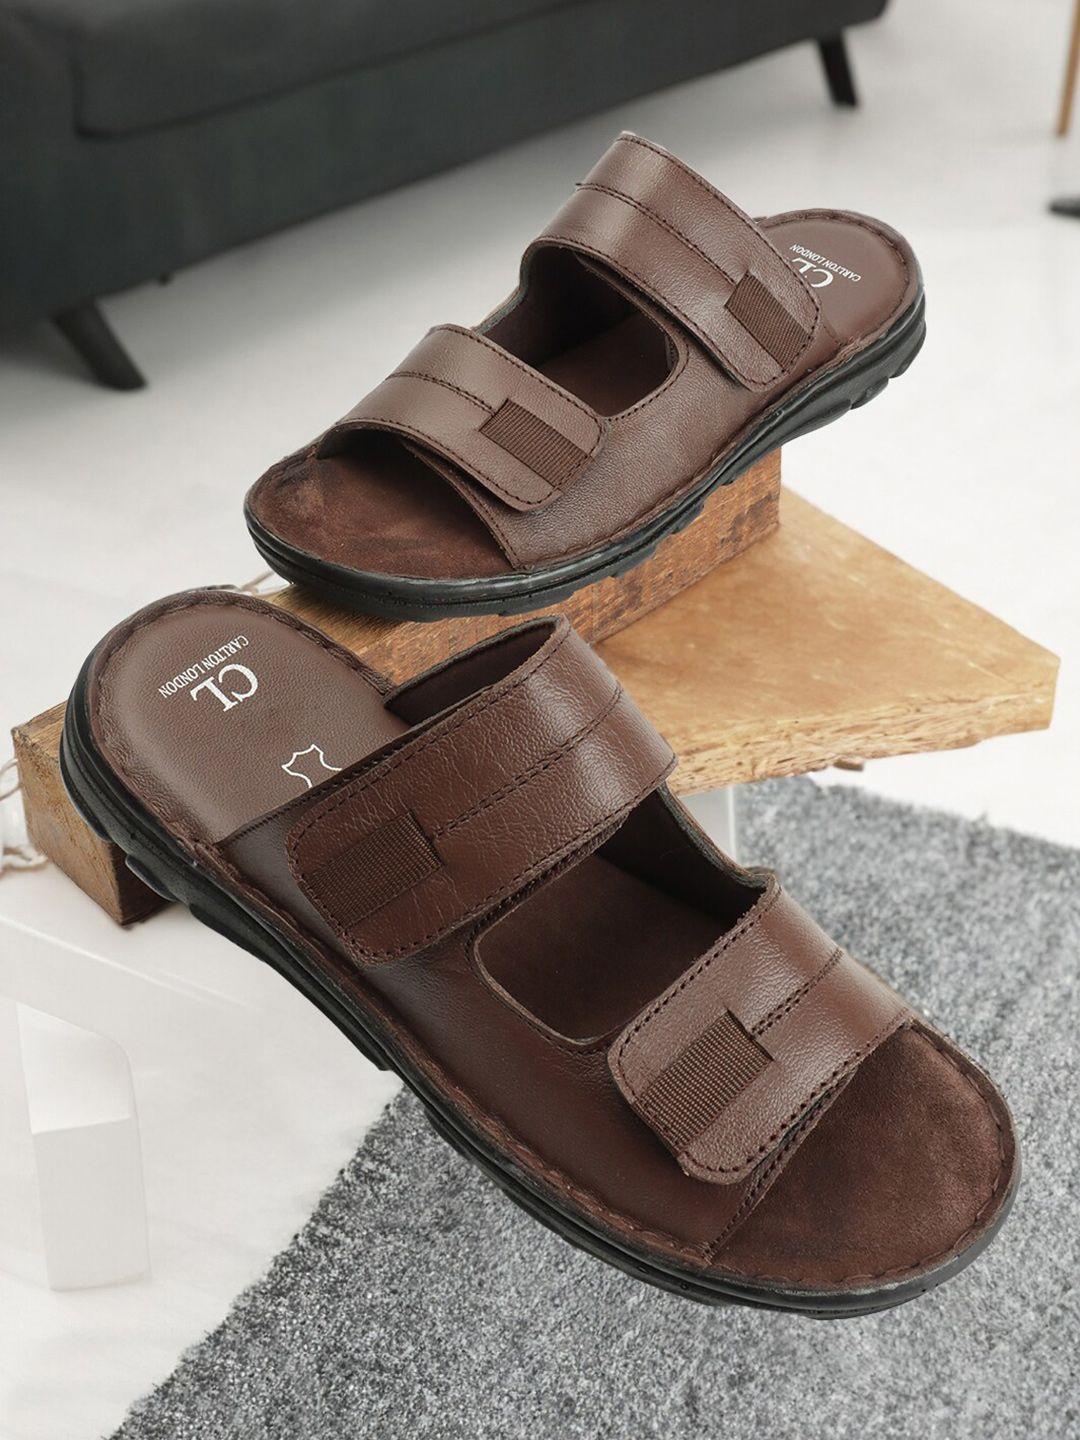 carlton-london-leather-open-toe-comfort-sandals